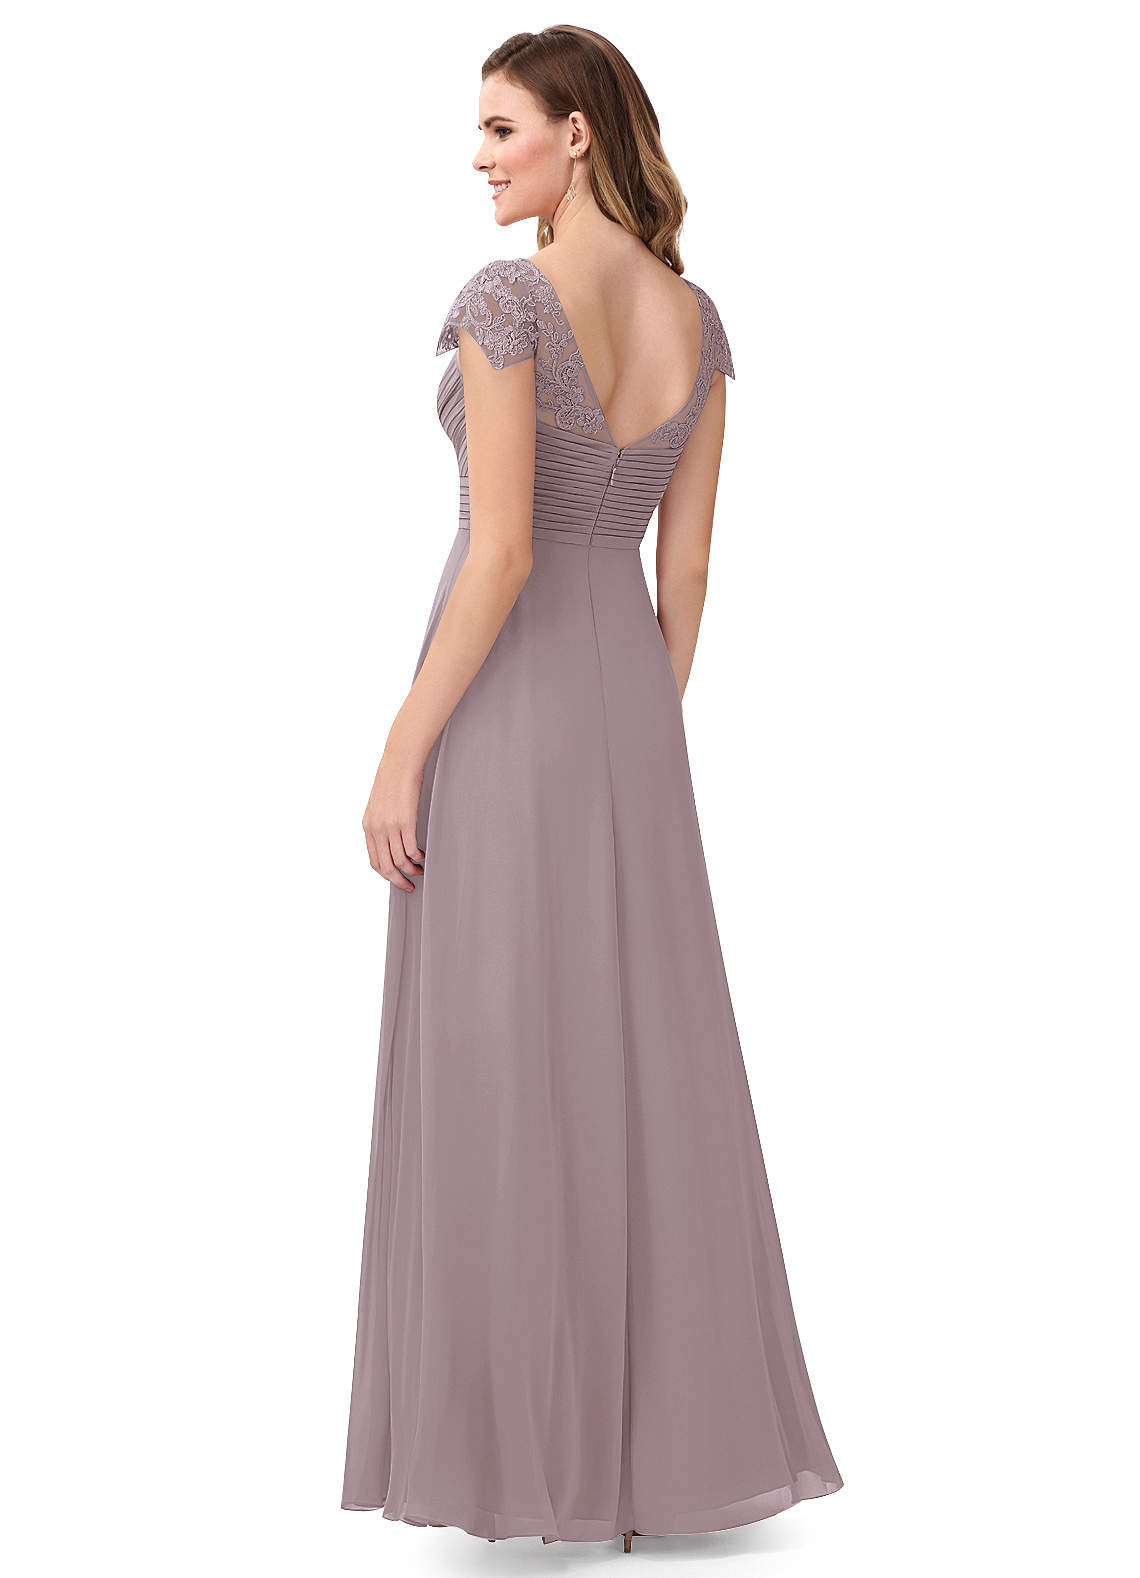 Azazie Adelyn Bridesmaid Dresses A-Line Lace Chiffon Floor-Length Dress image1